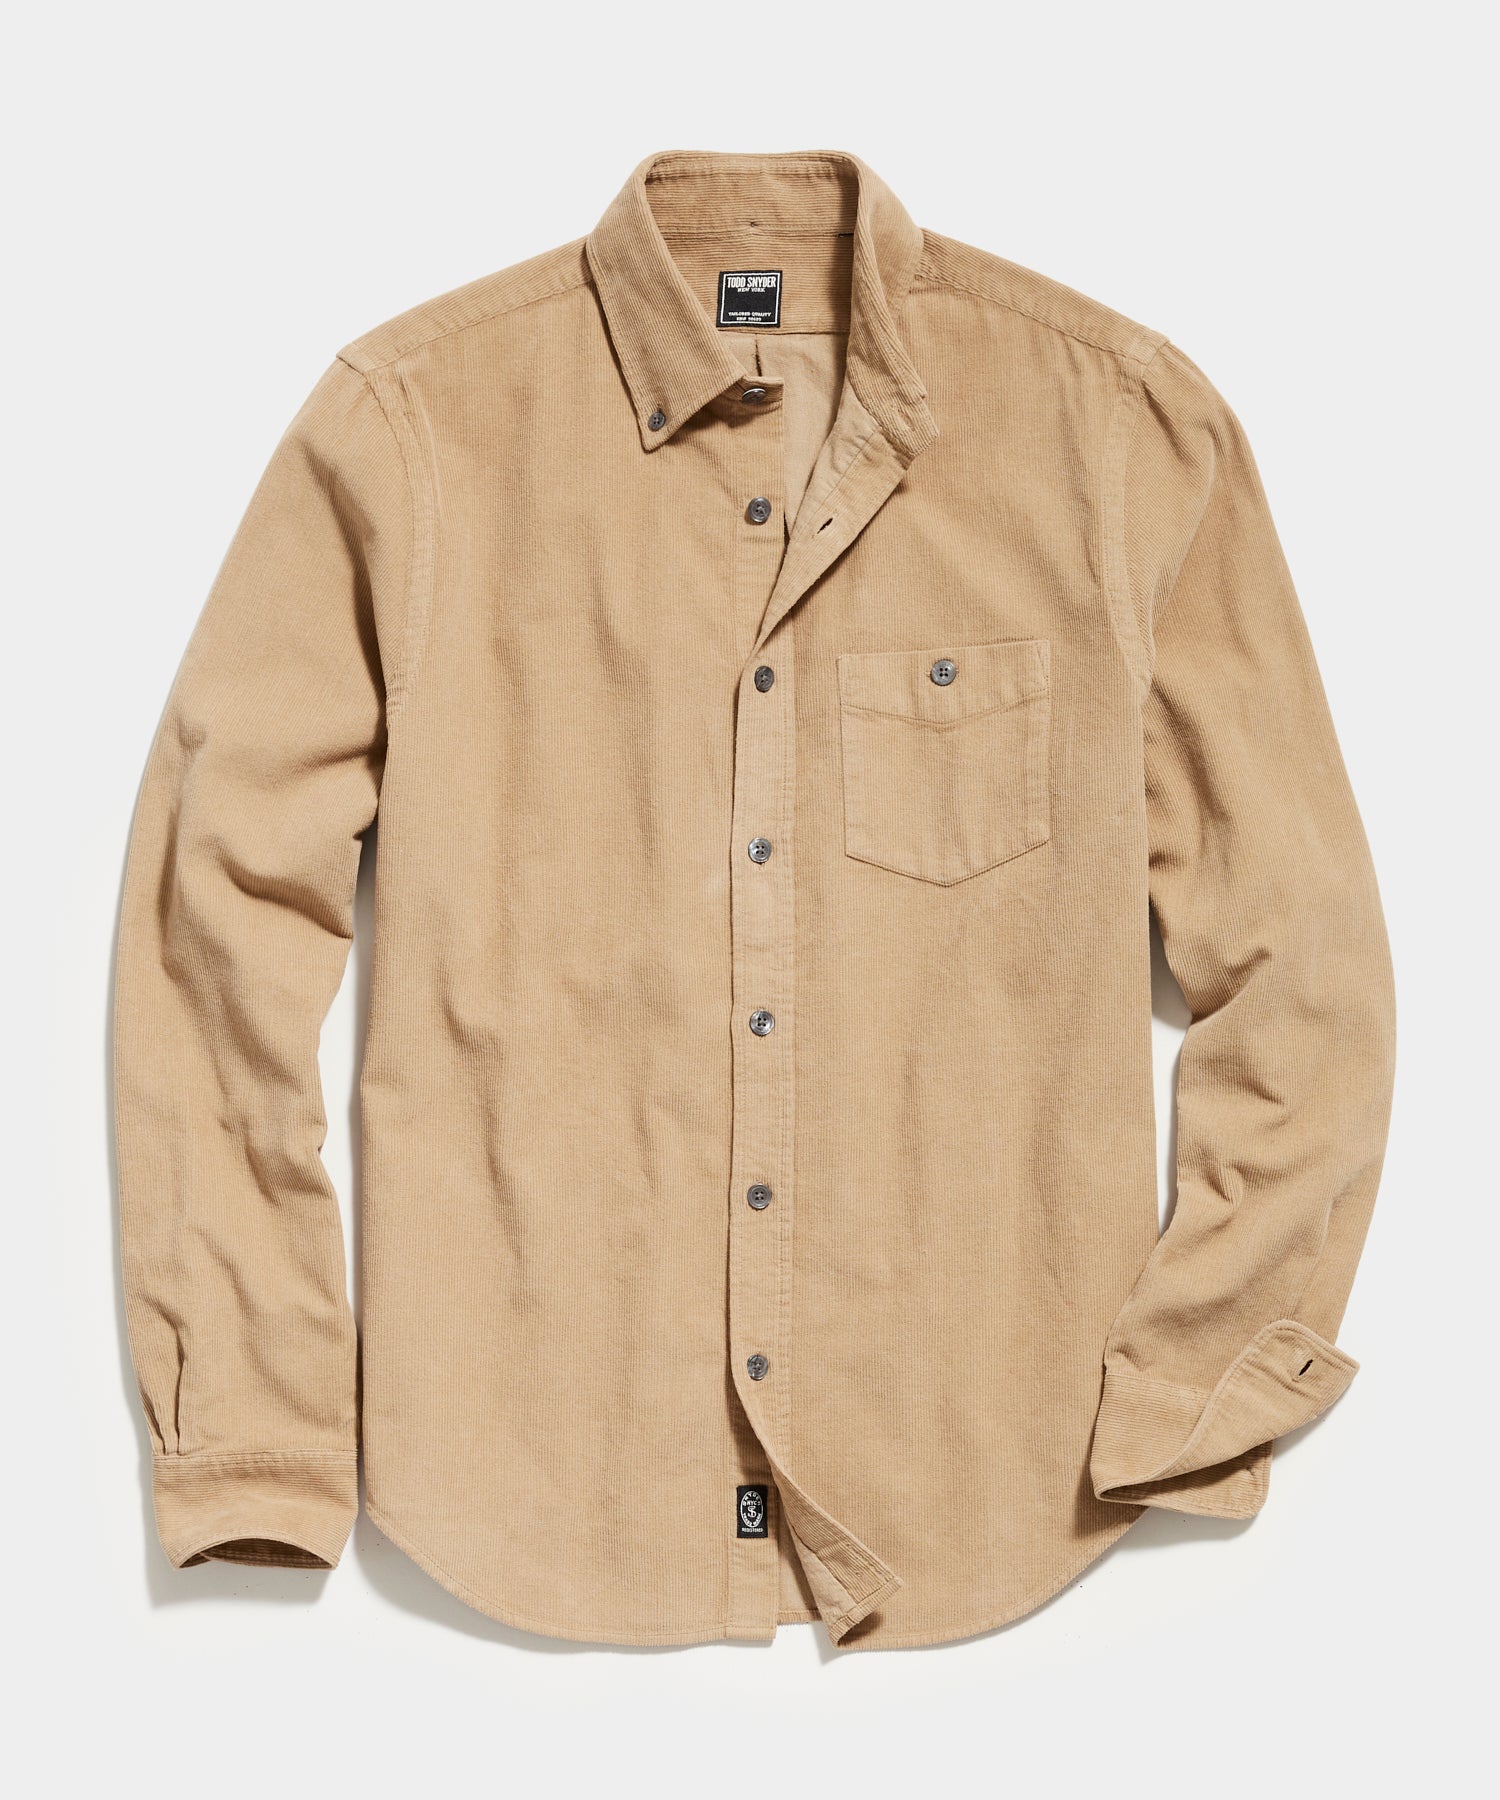 Fine Corduroy Long Sleeve Button Down Shirt in Safari Tan